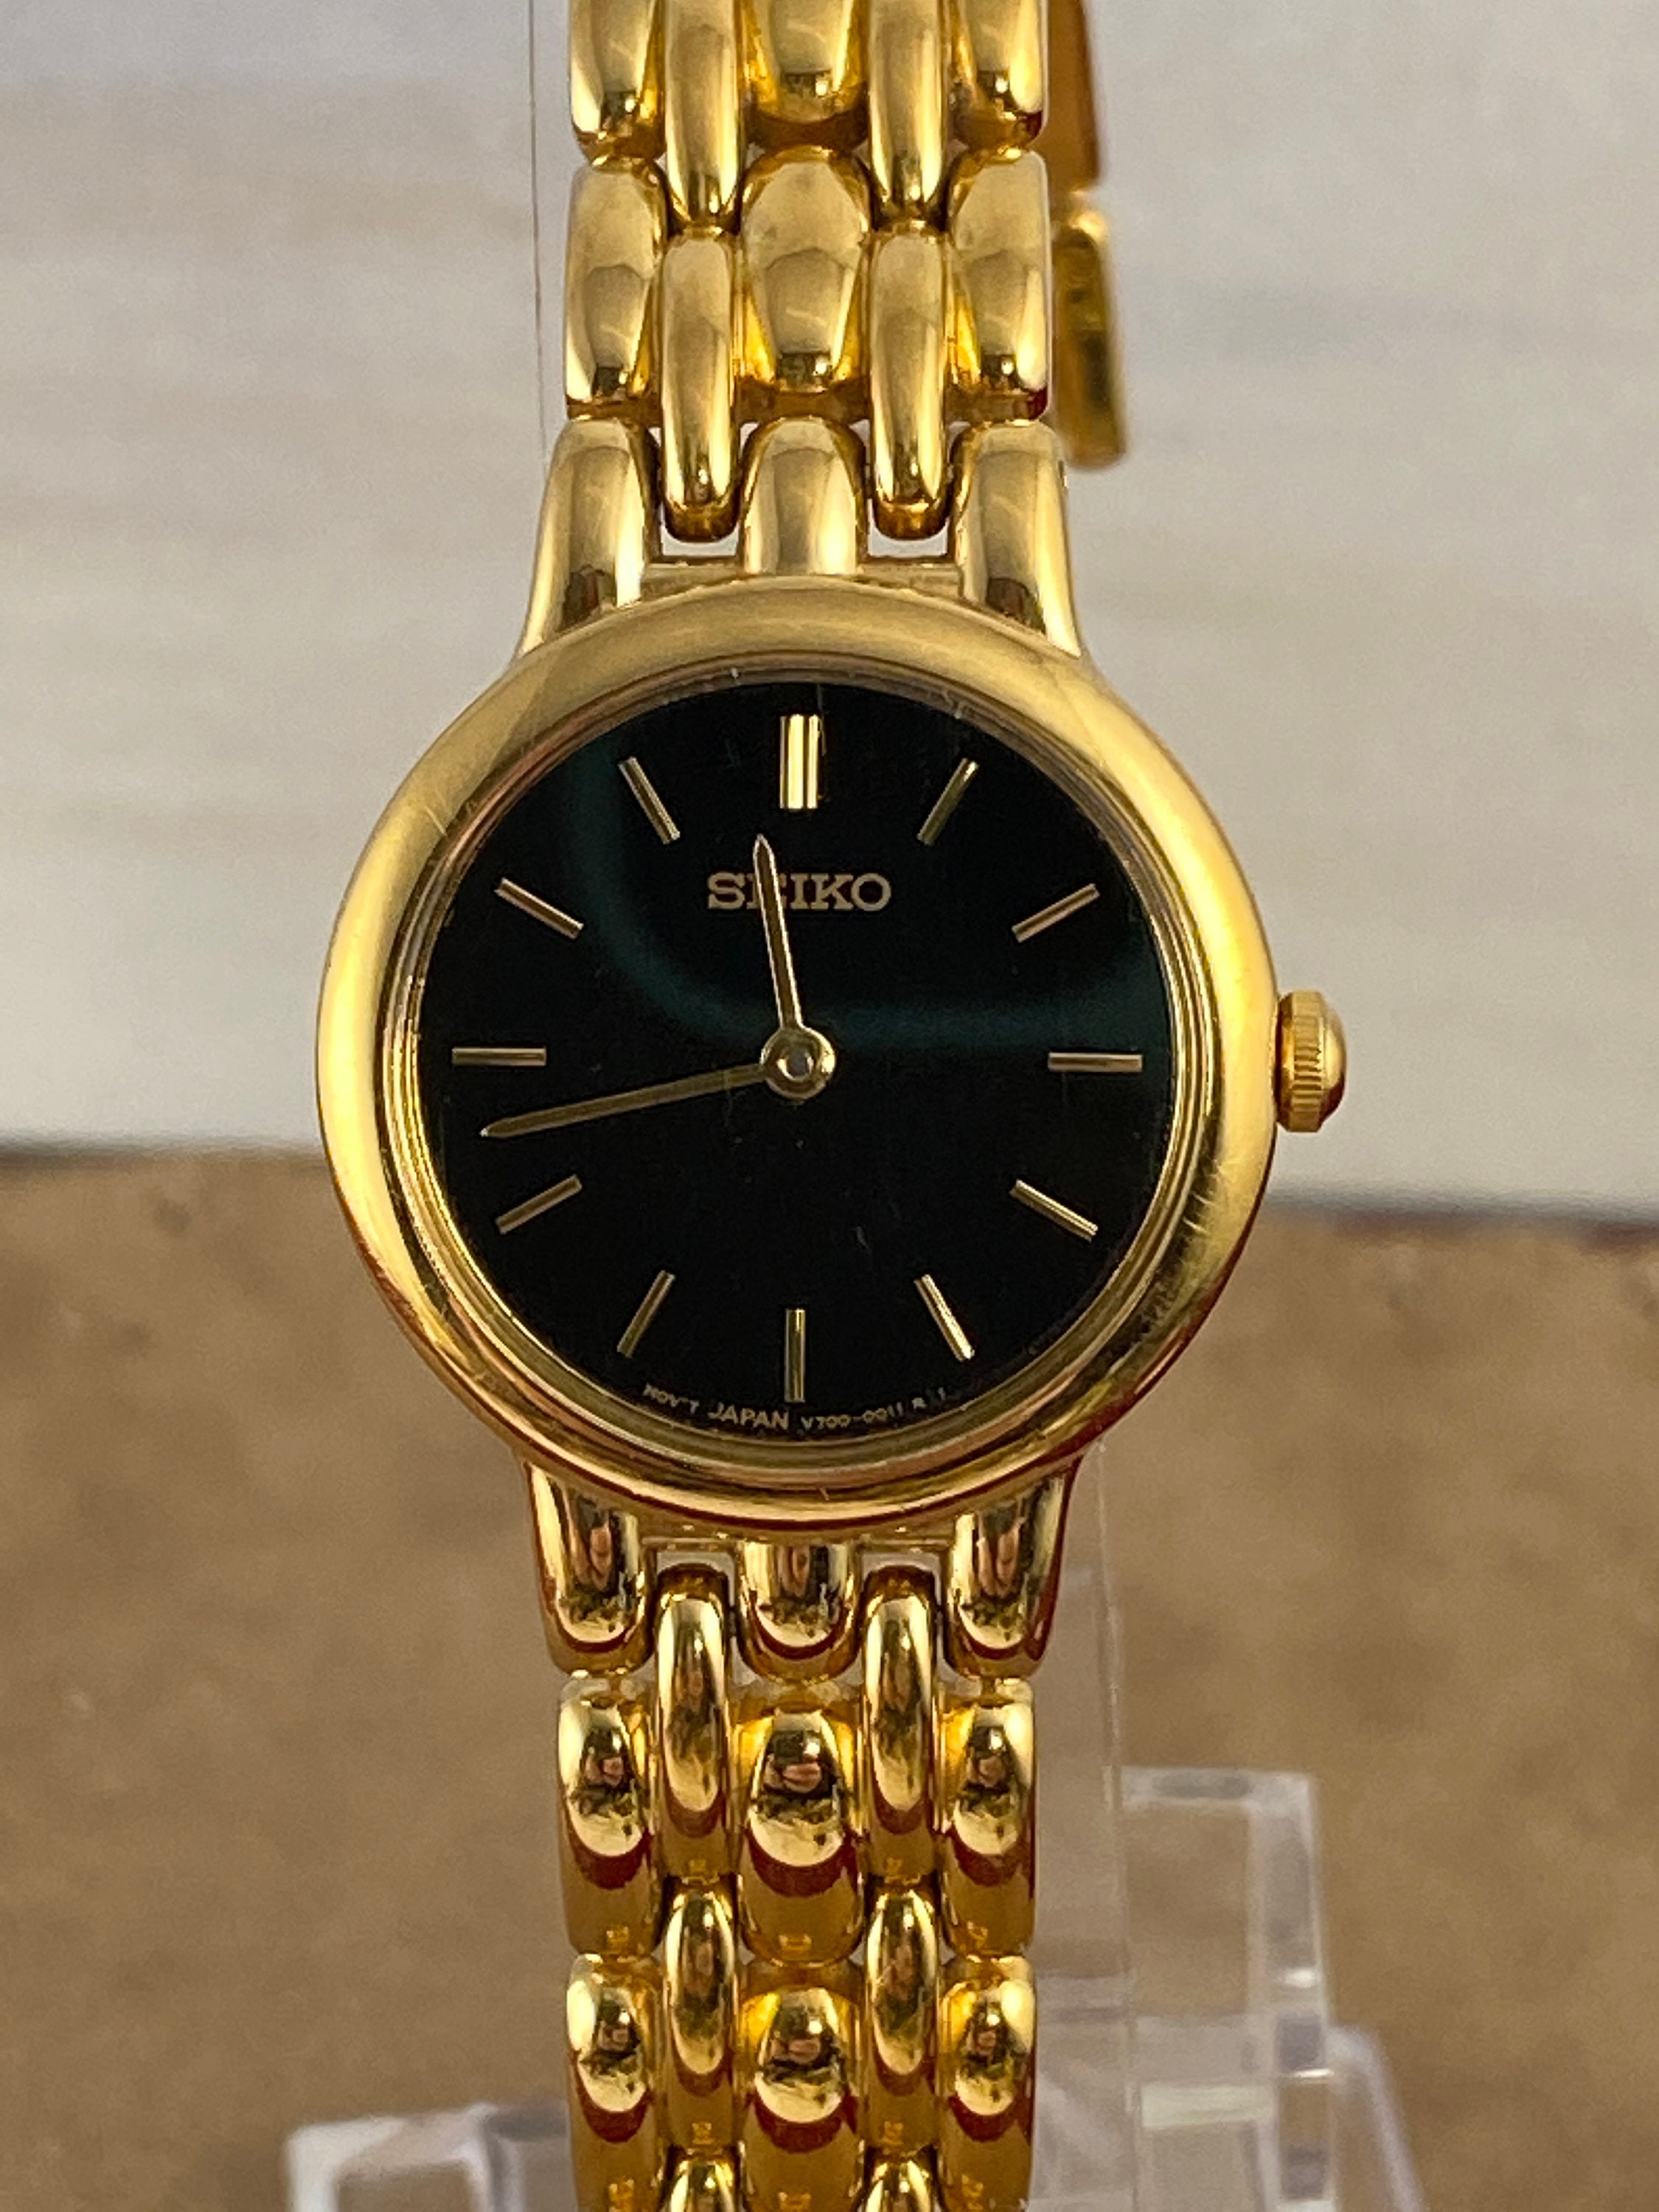 Vintage Seiko Watch With Diamond at 12 Gun Metal Steel Color - Etsy